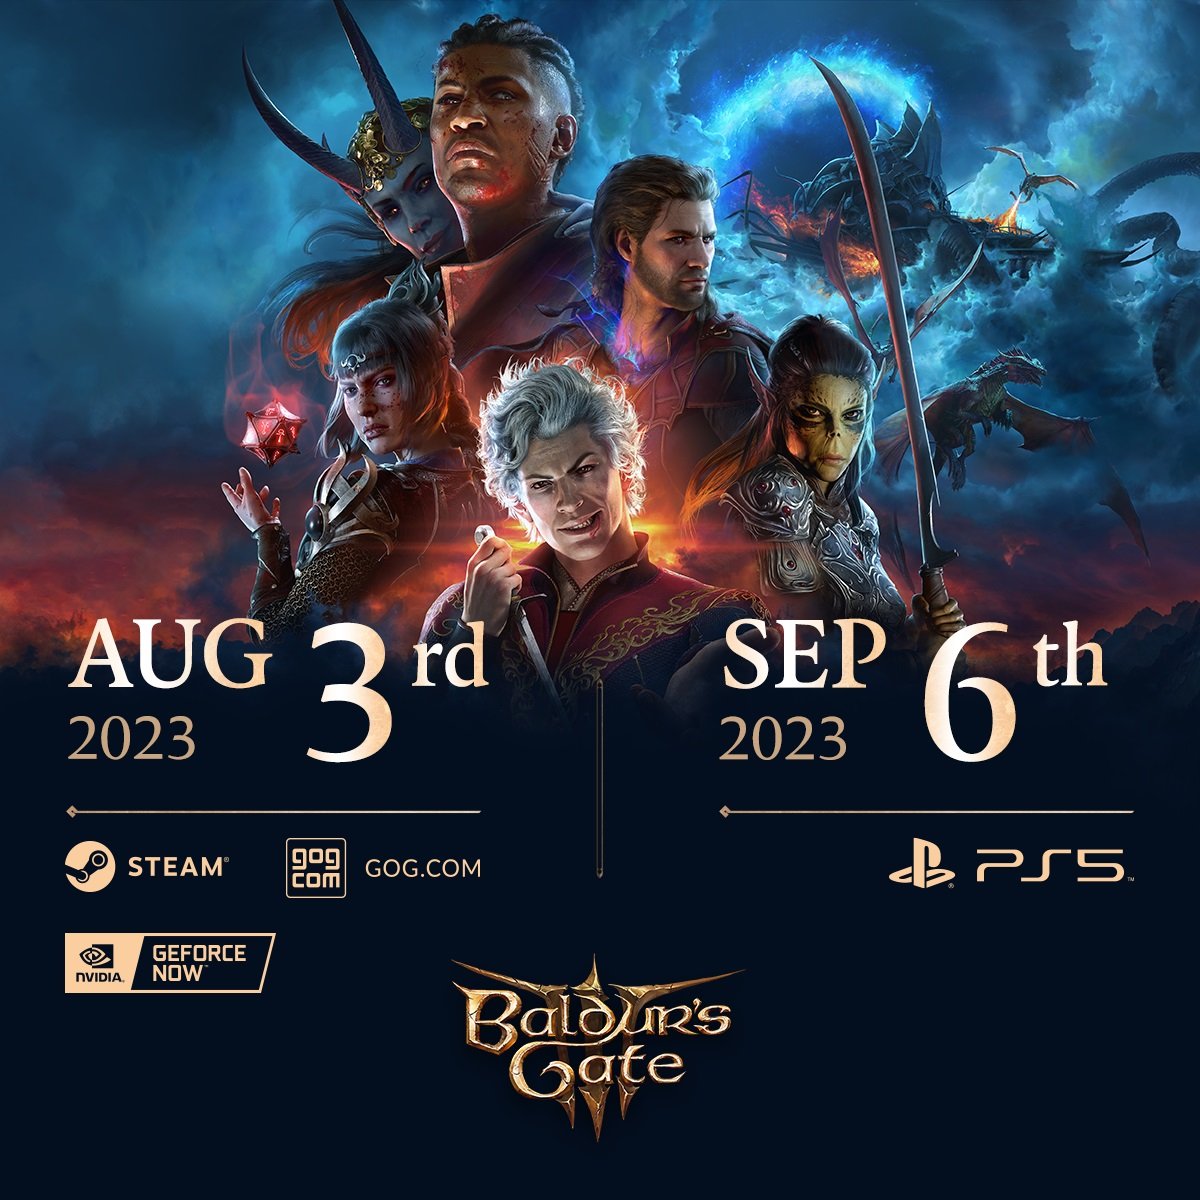 Baldur's Gate 3 - Official PlayStation 5 Release Date - N4G